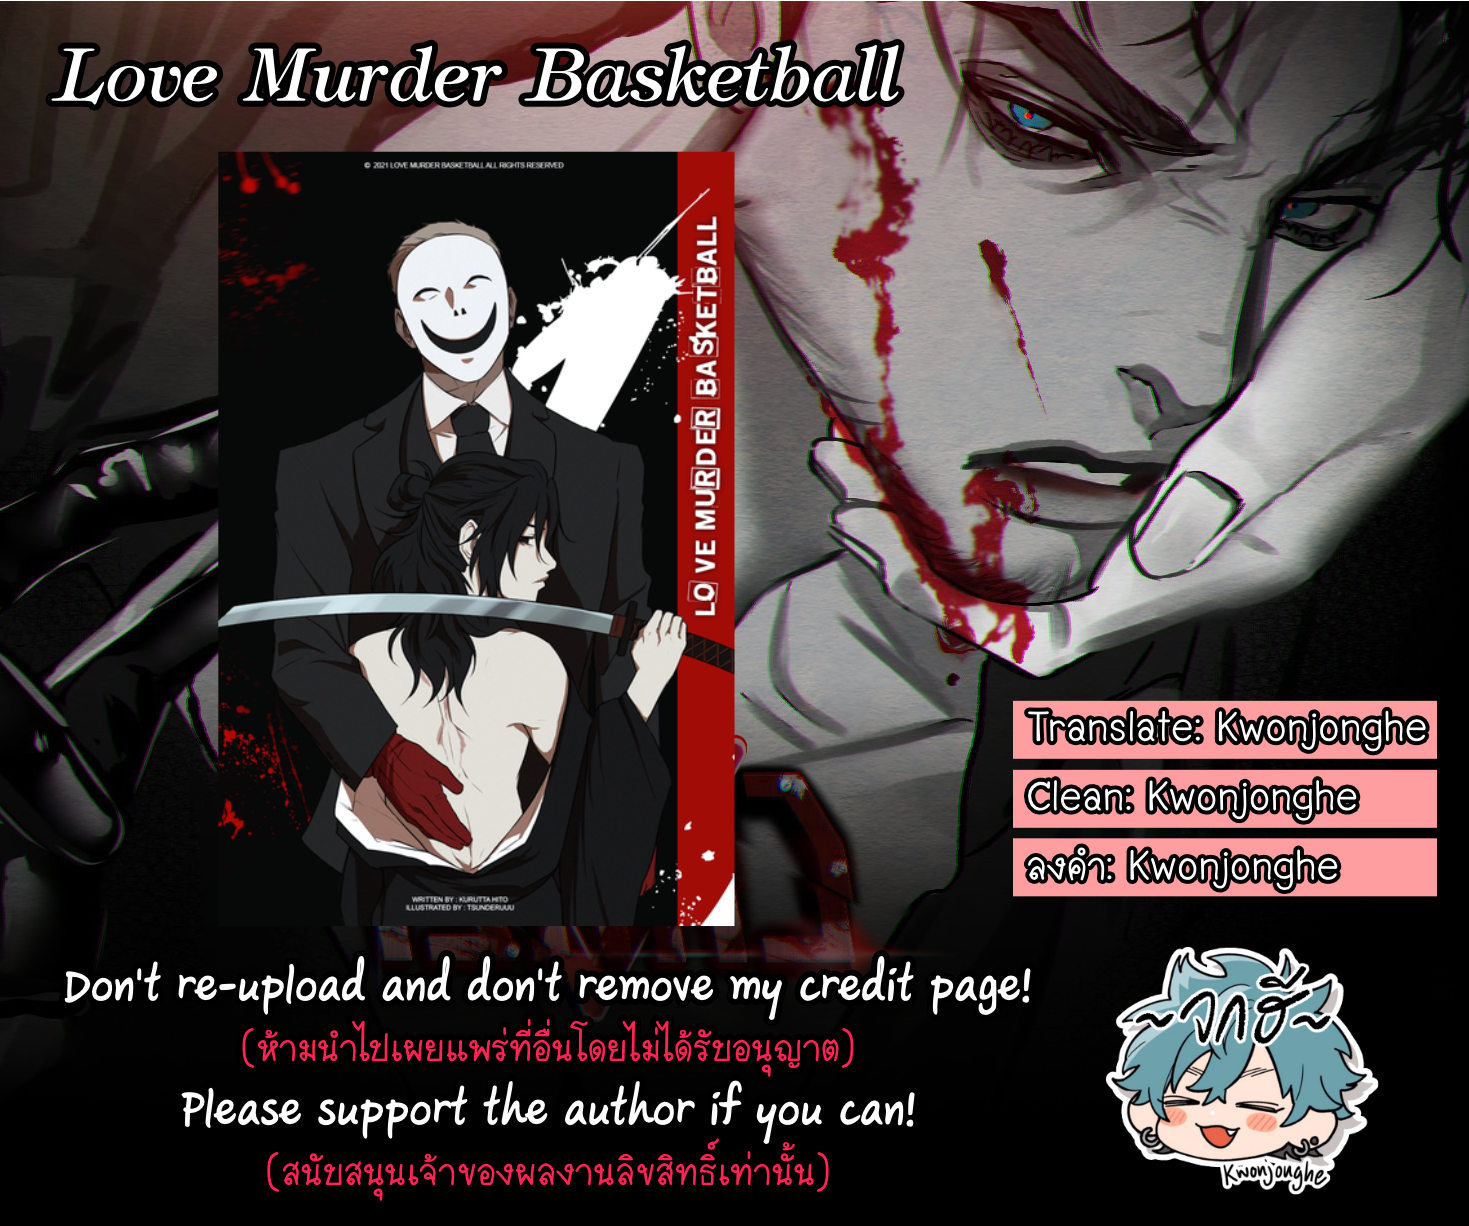 Love Murder Basketball 29 (2)